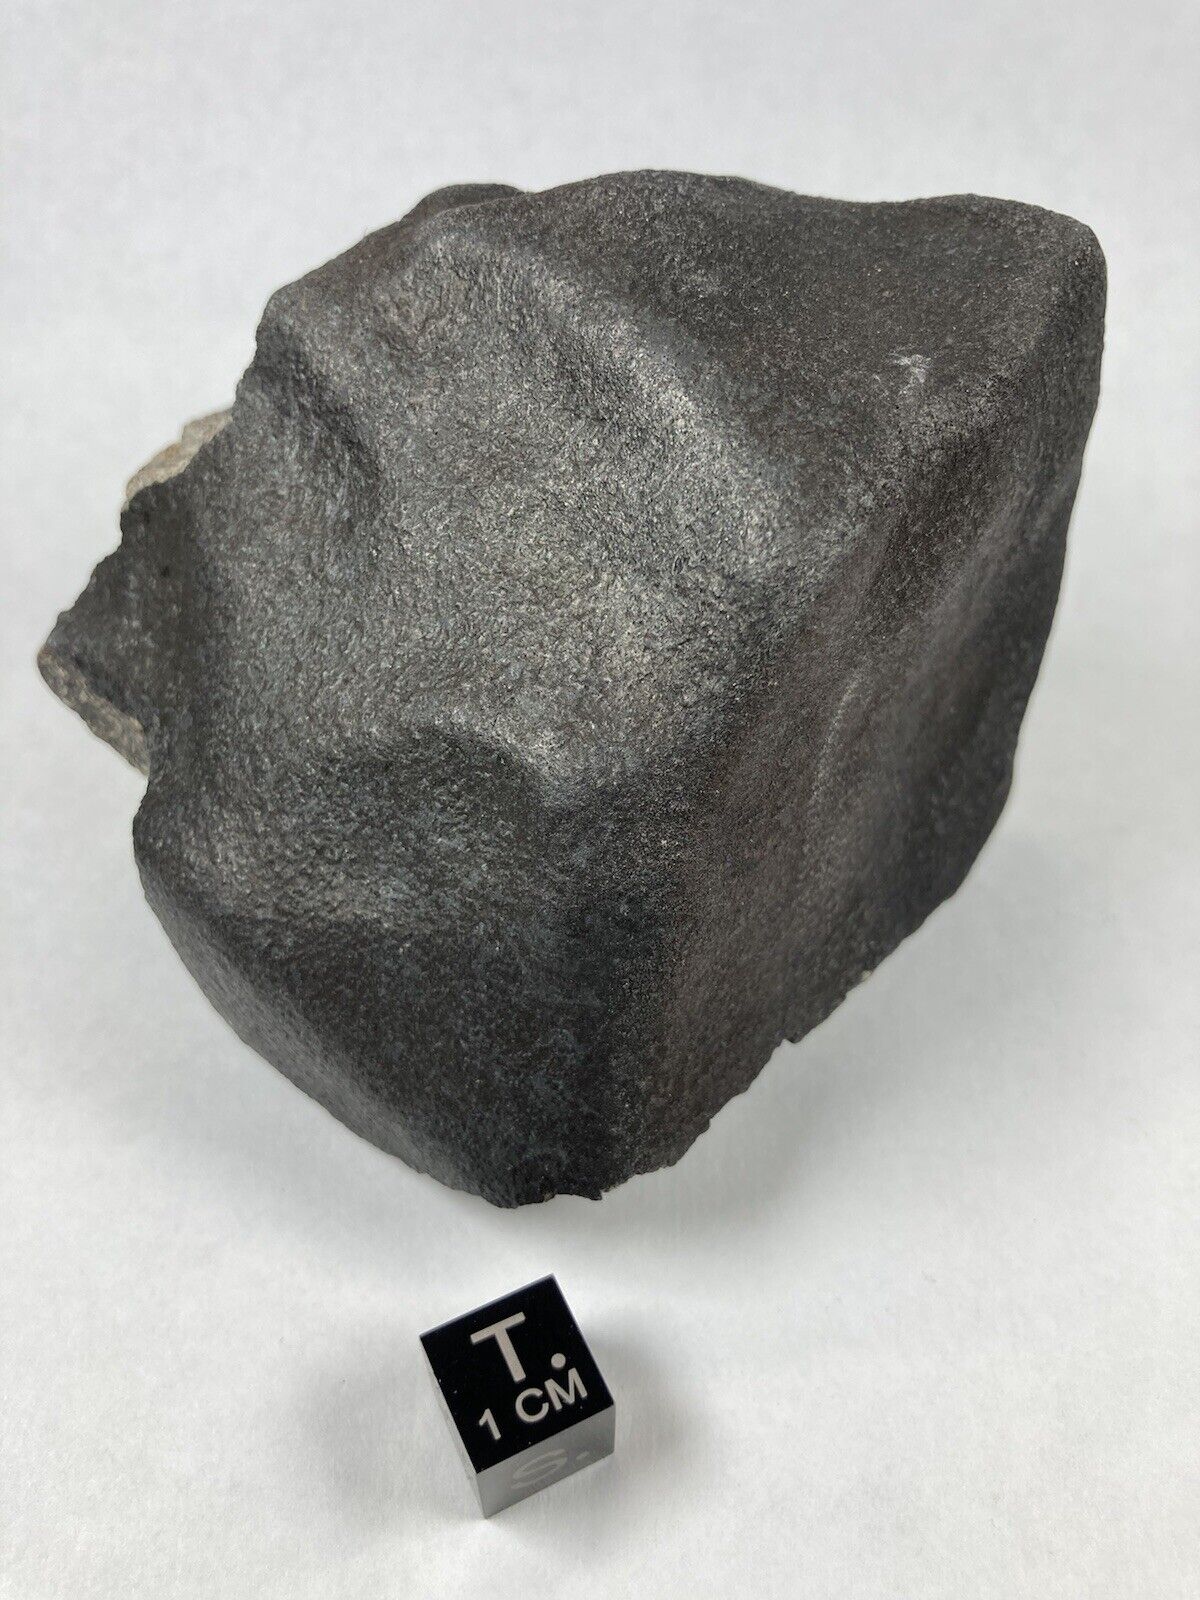 Bassikounou Meteorite Large 491 Gram Specimen